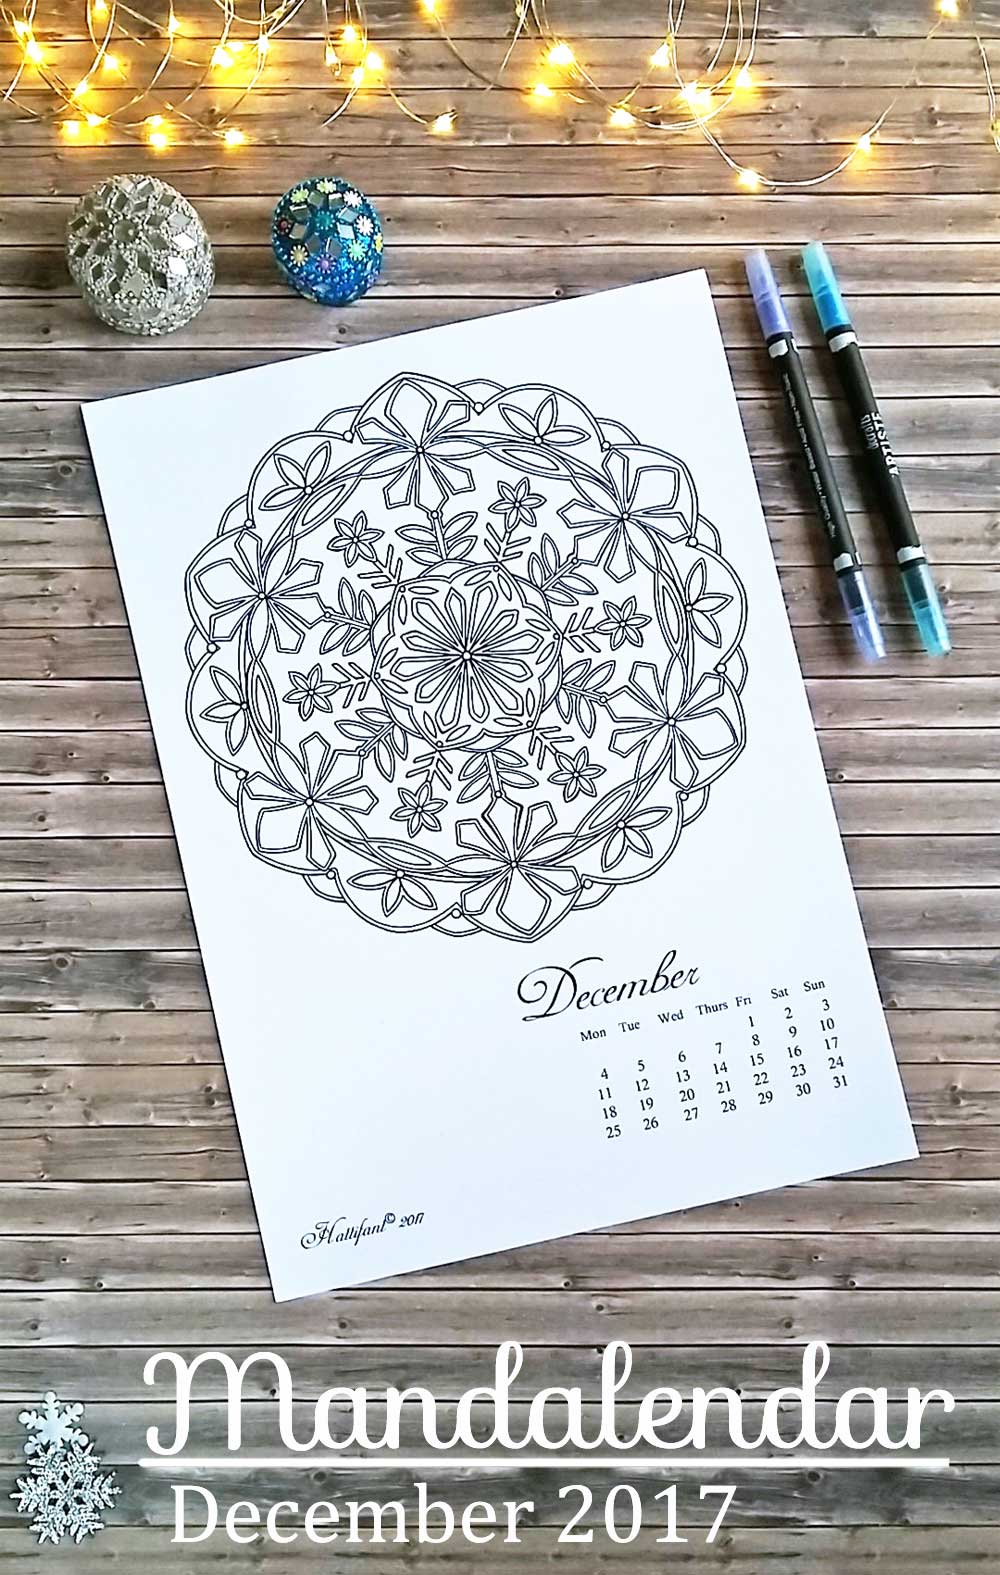 Hattifant's Mandalandar 2017 a Mandala Calendar Coloring Page to download for free during December